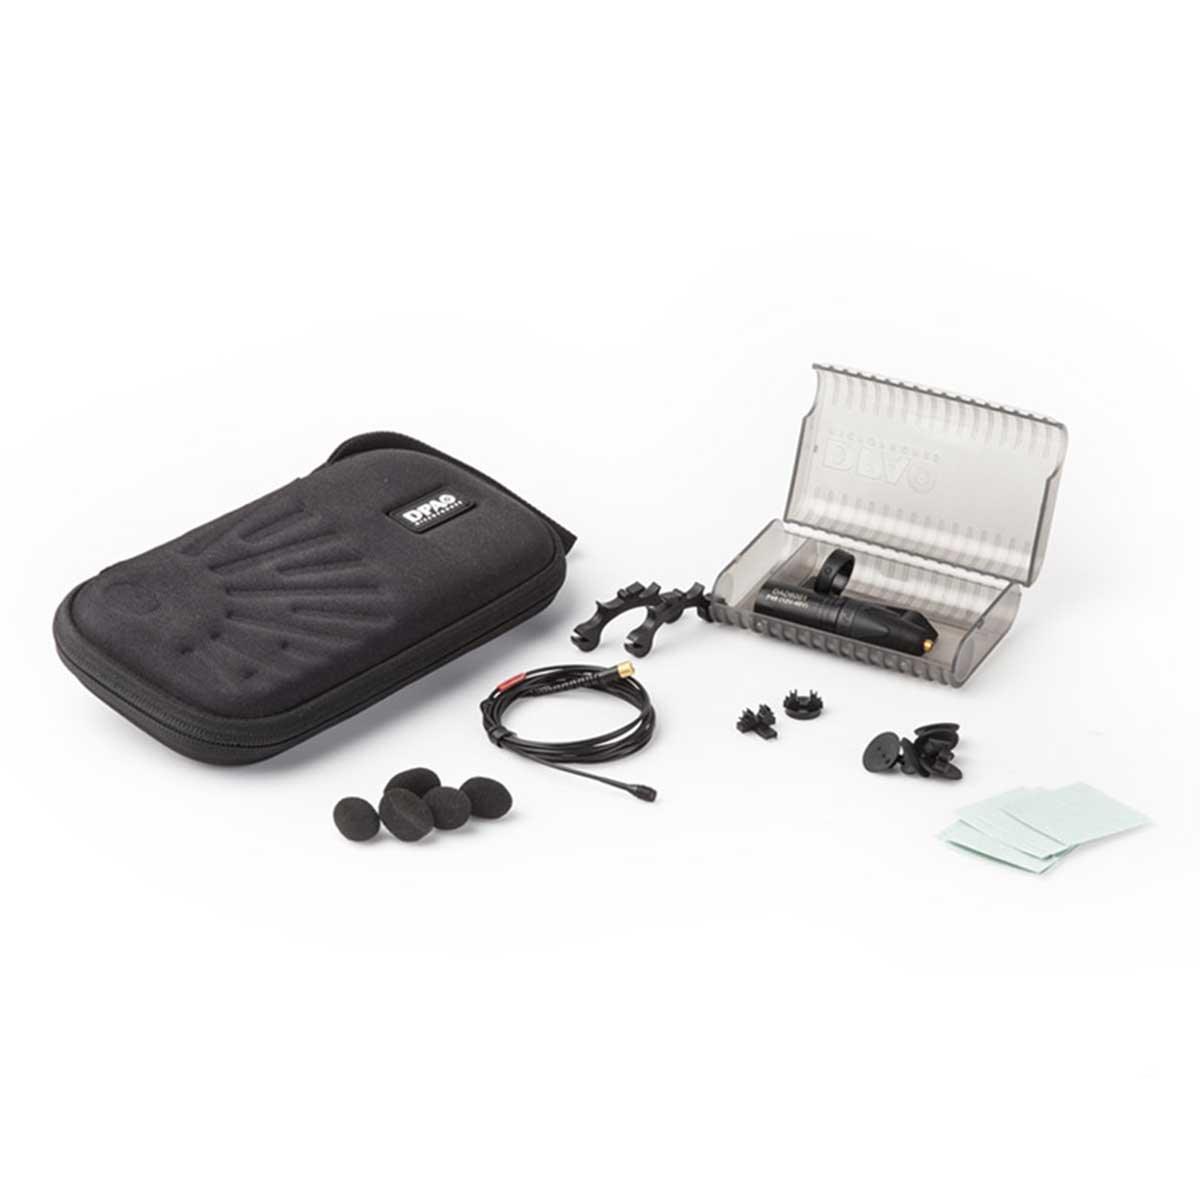 DPA 4061 Instrument Microphone Kit